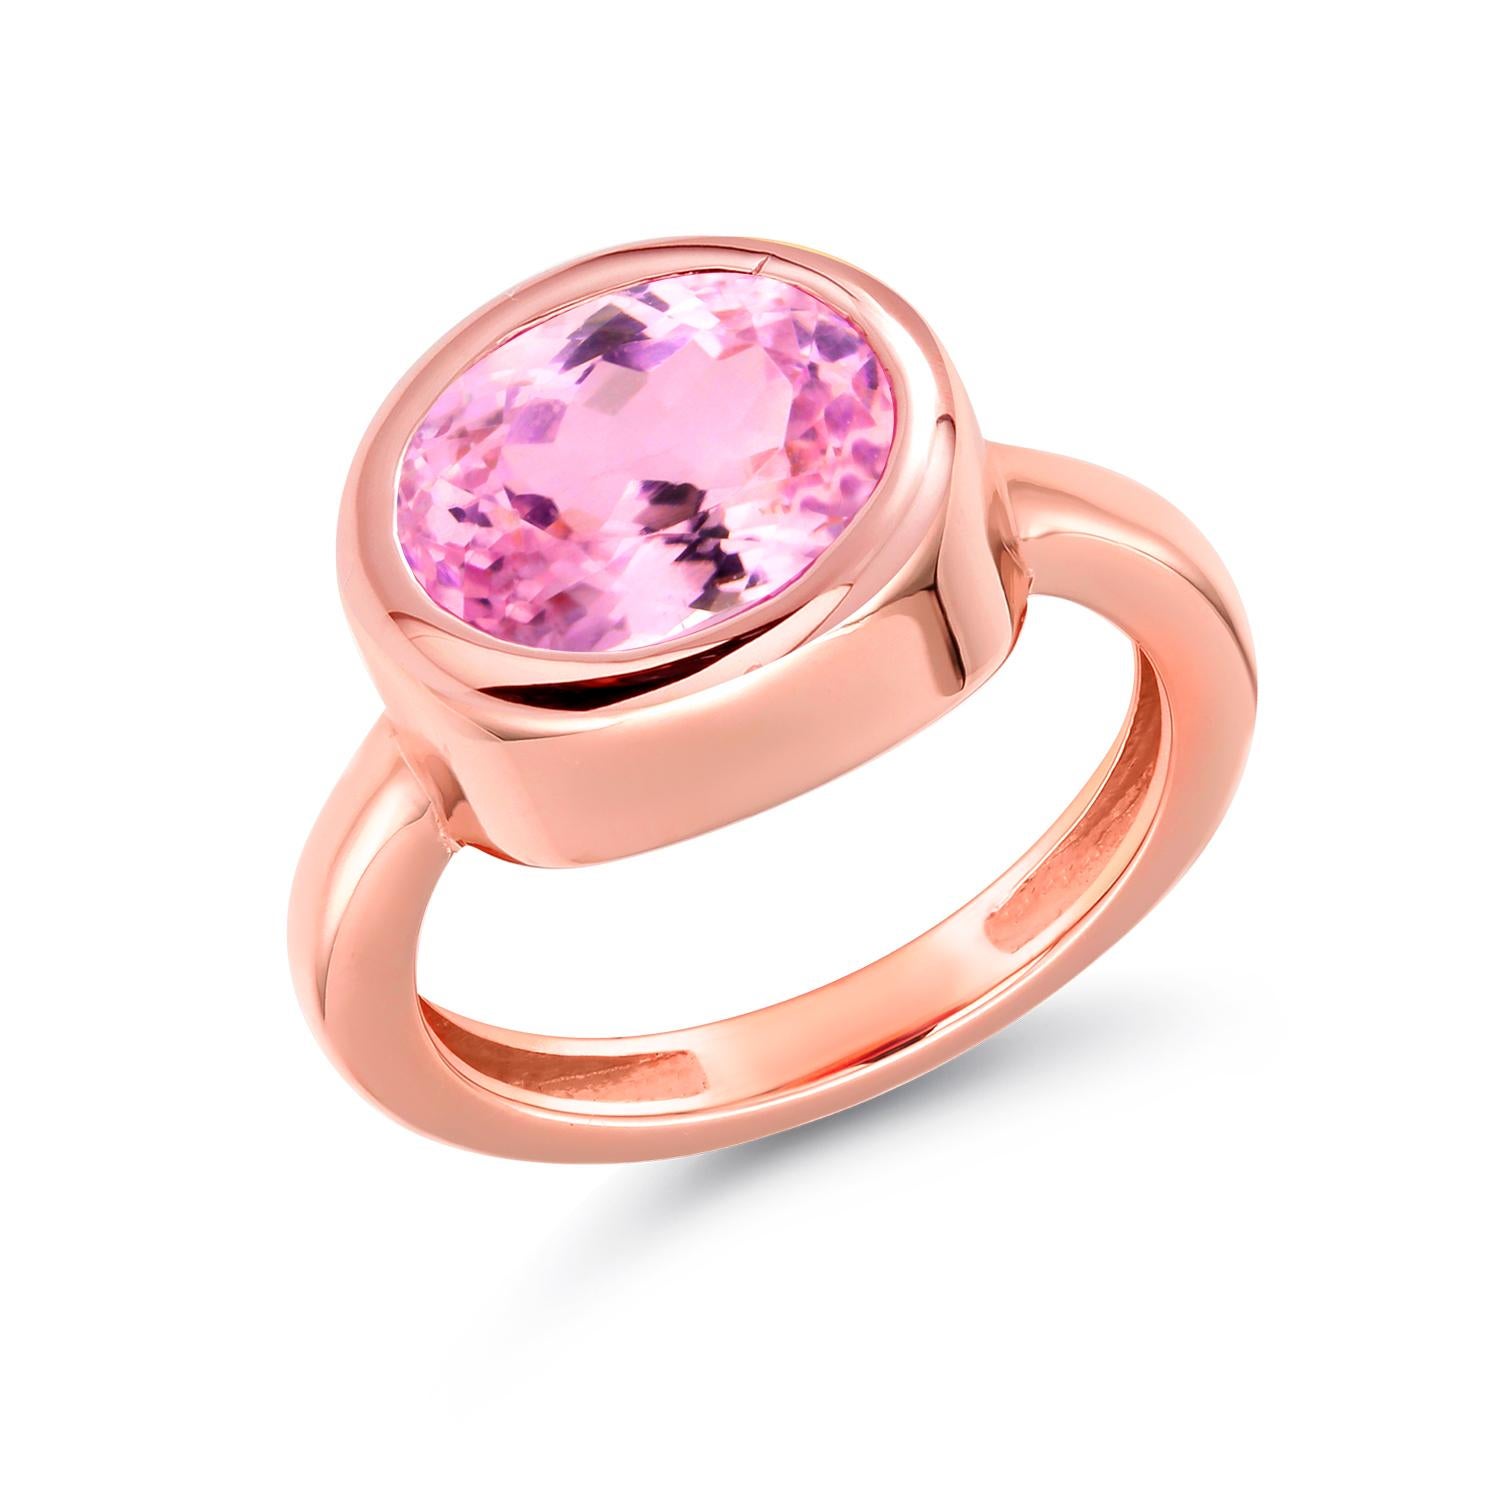 Oval Cut Ceylon Pink Sapphire 2.45 Carat  High Dome 18 Karat Rose Gold Cocktail Ring